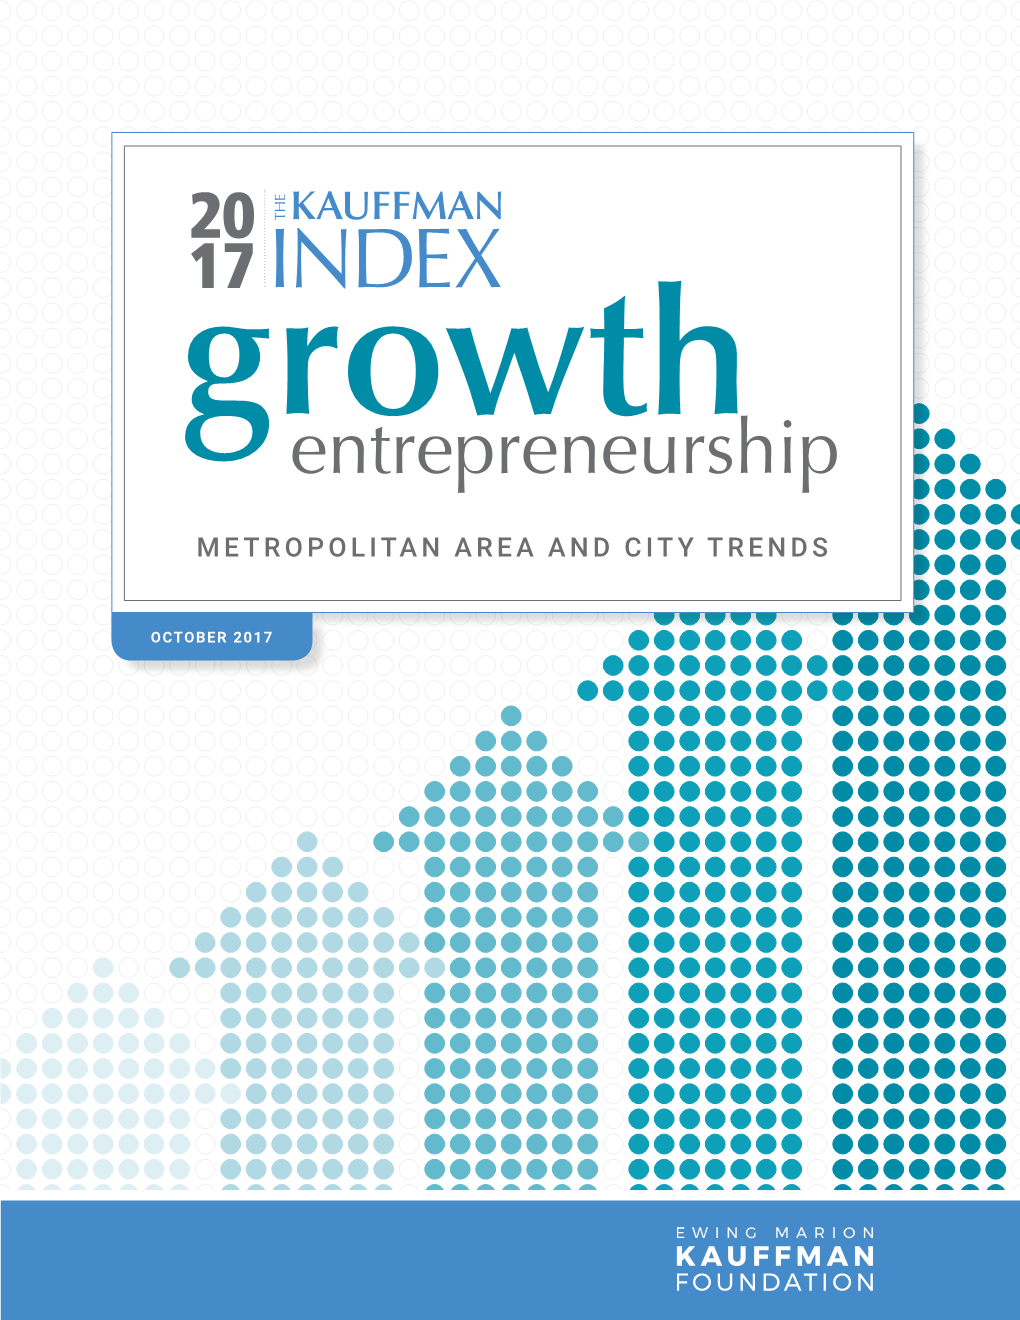 Kauffman Index of Growth Entrepreneurship Ewing Marion Kauffman Foundation